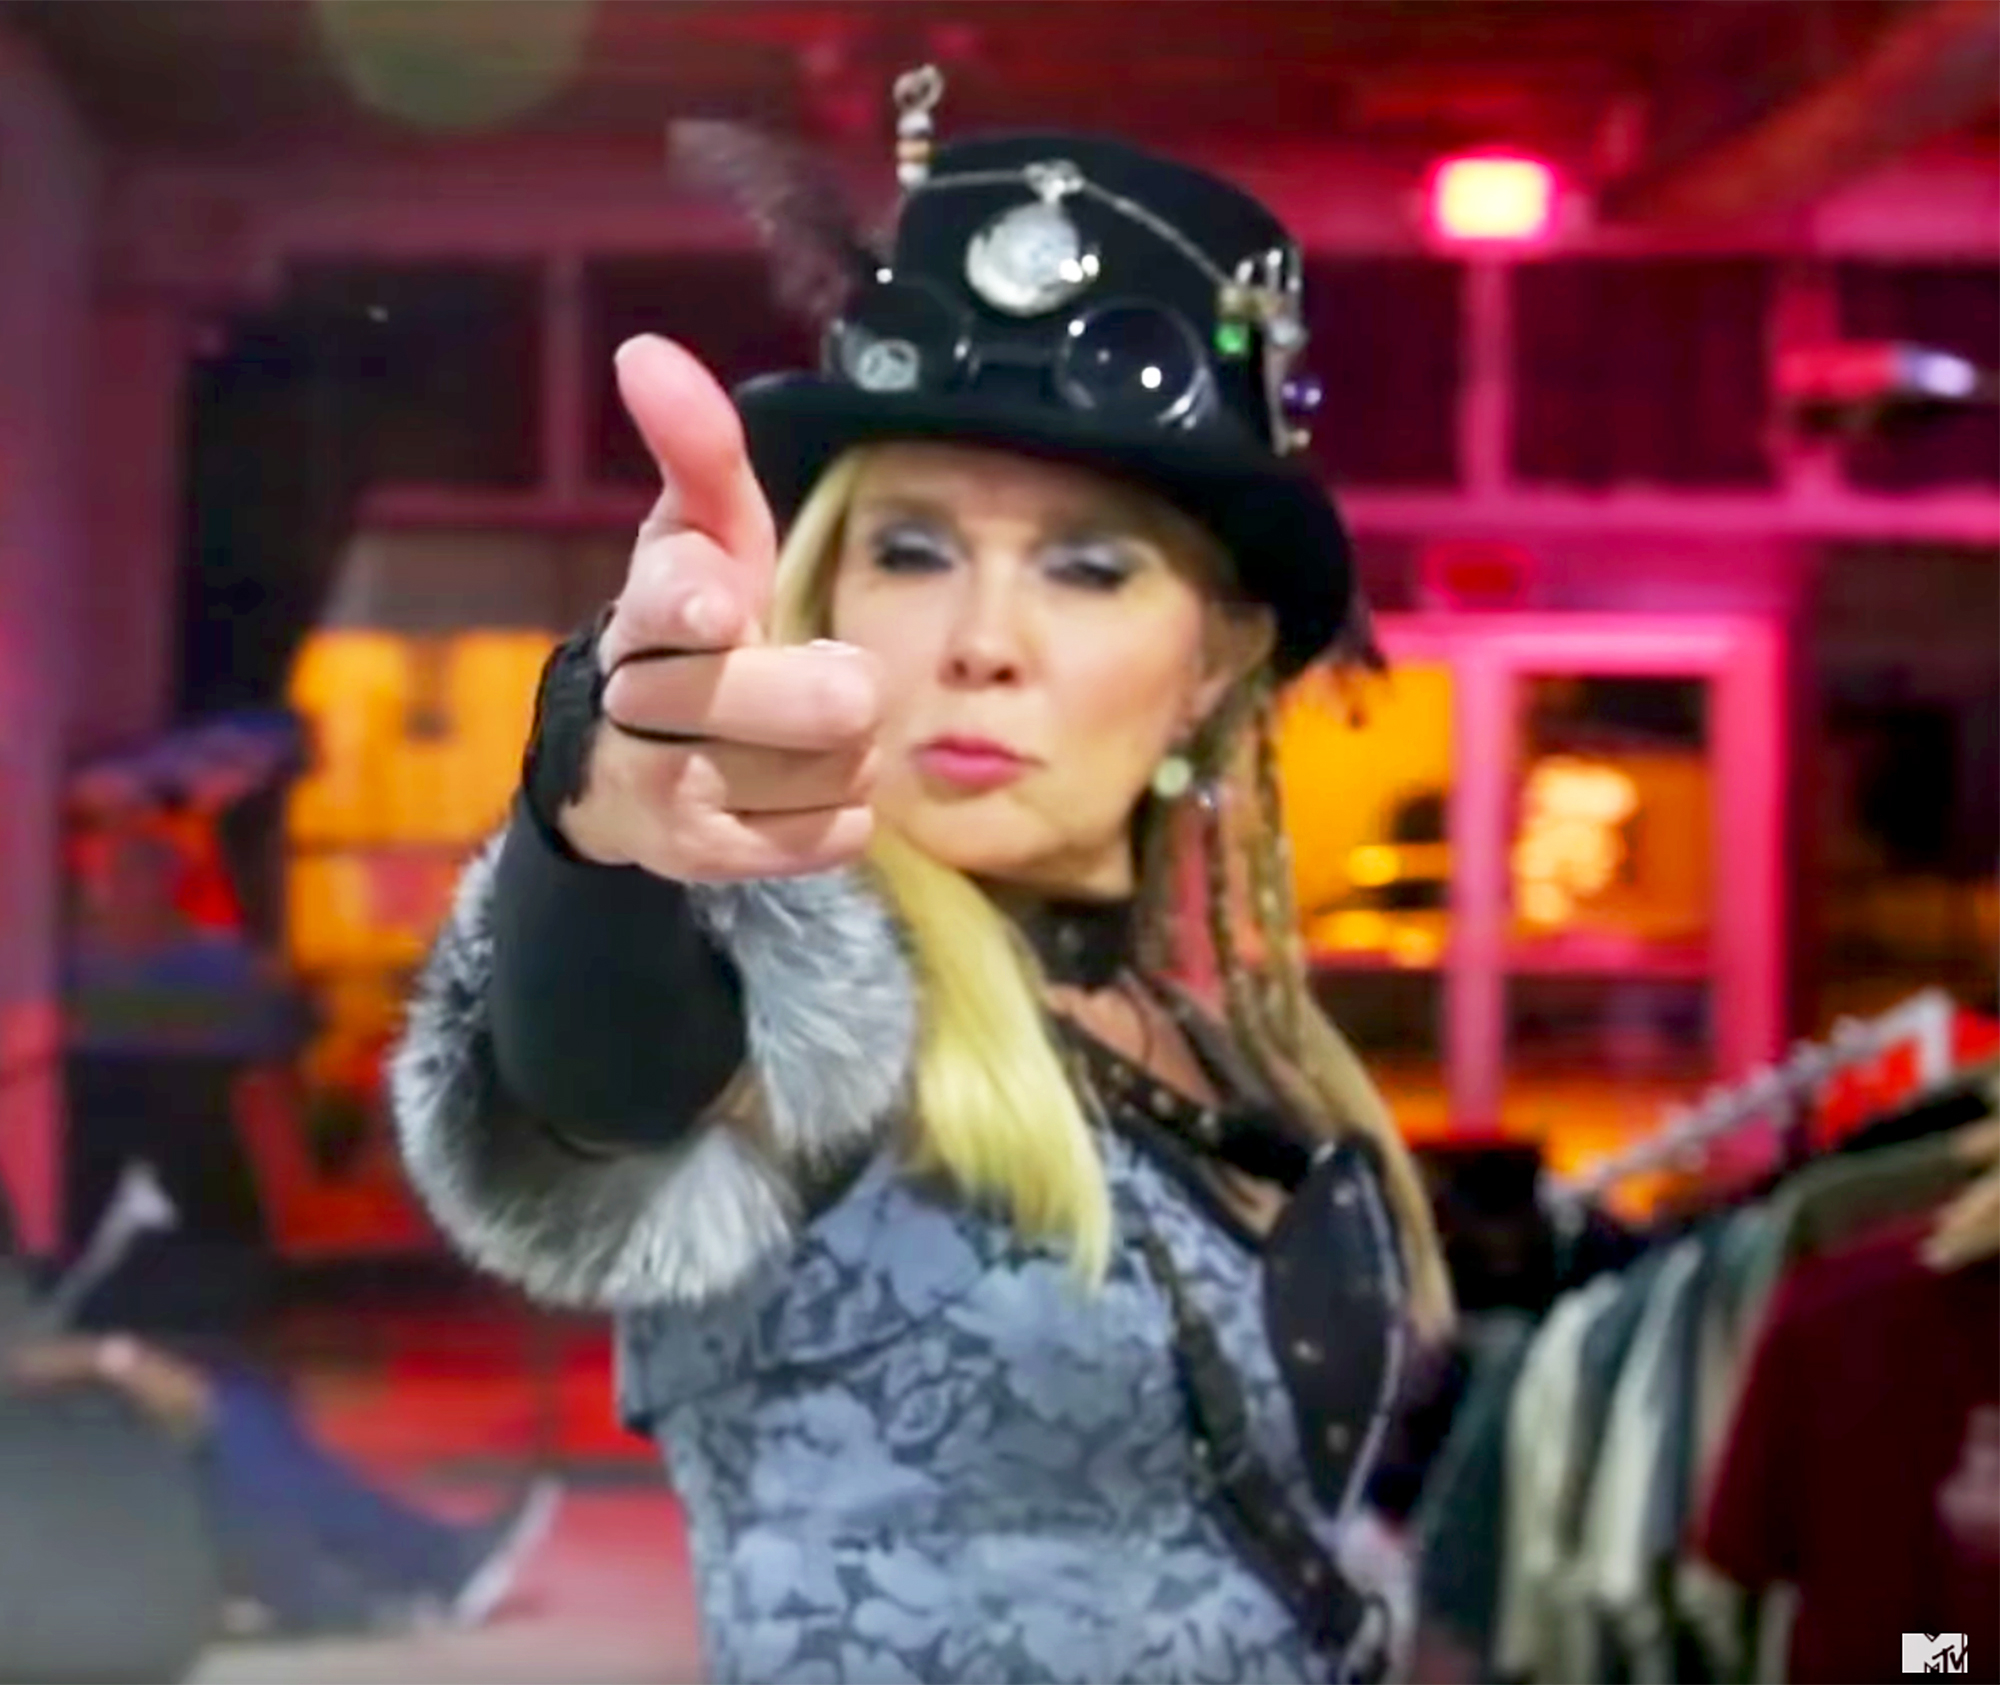 Debra danielsen music video